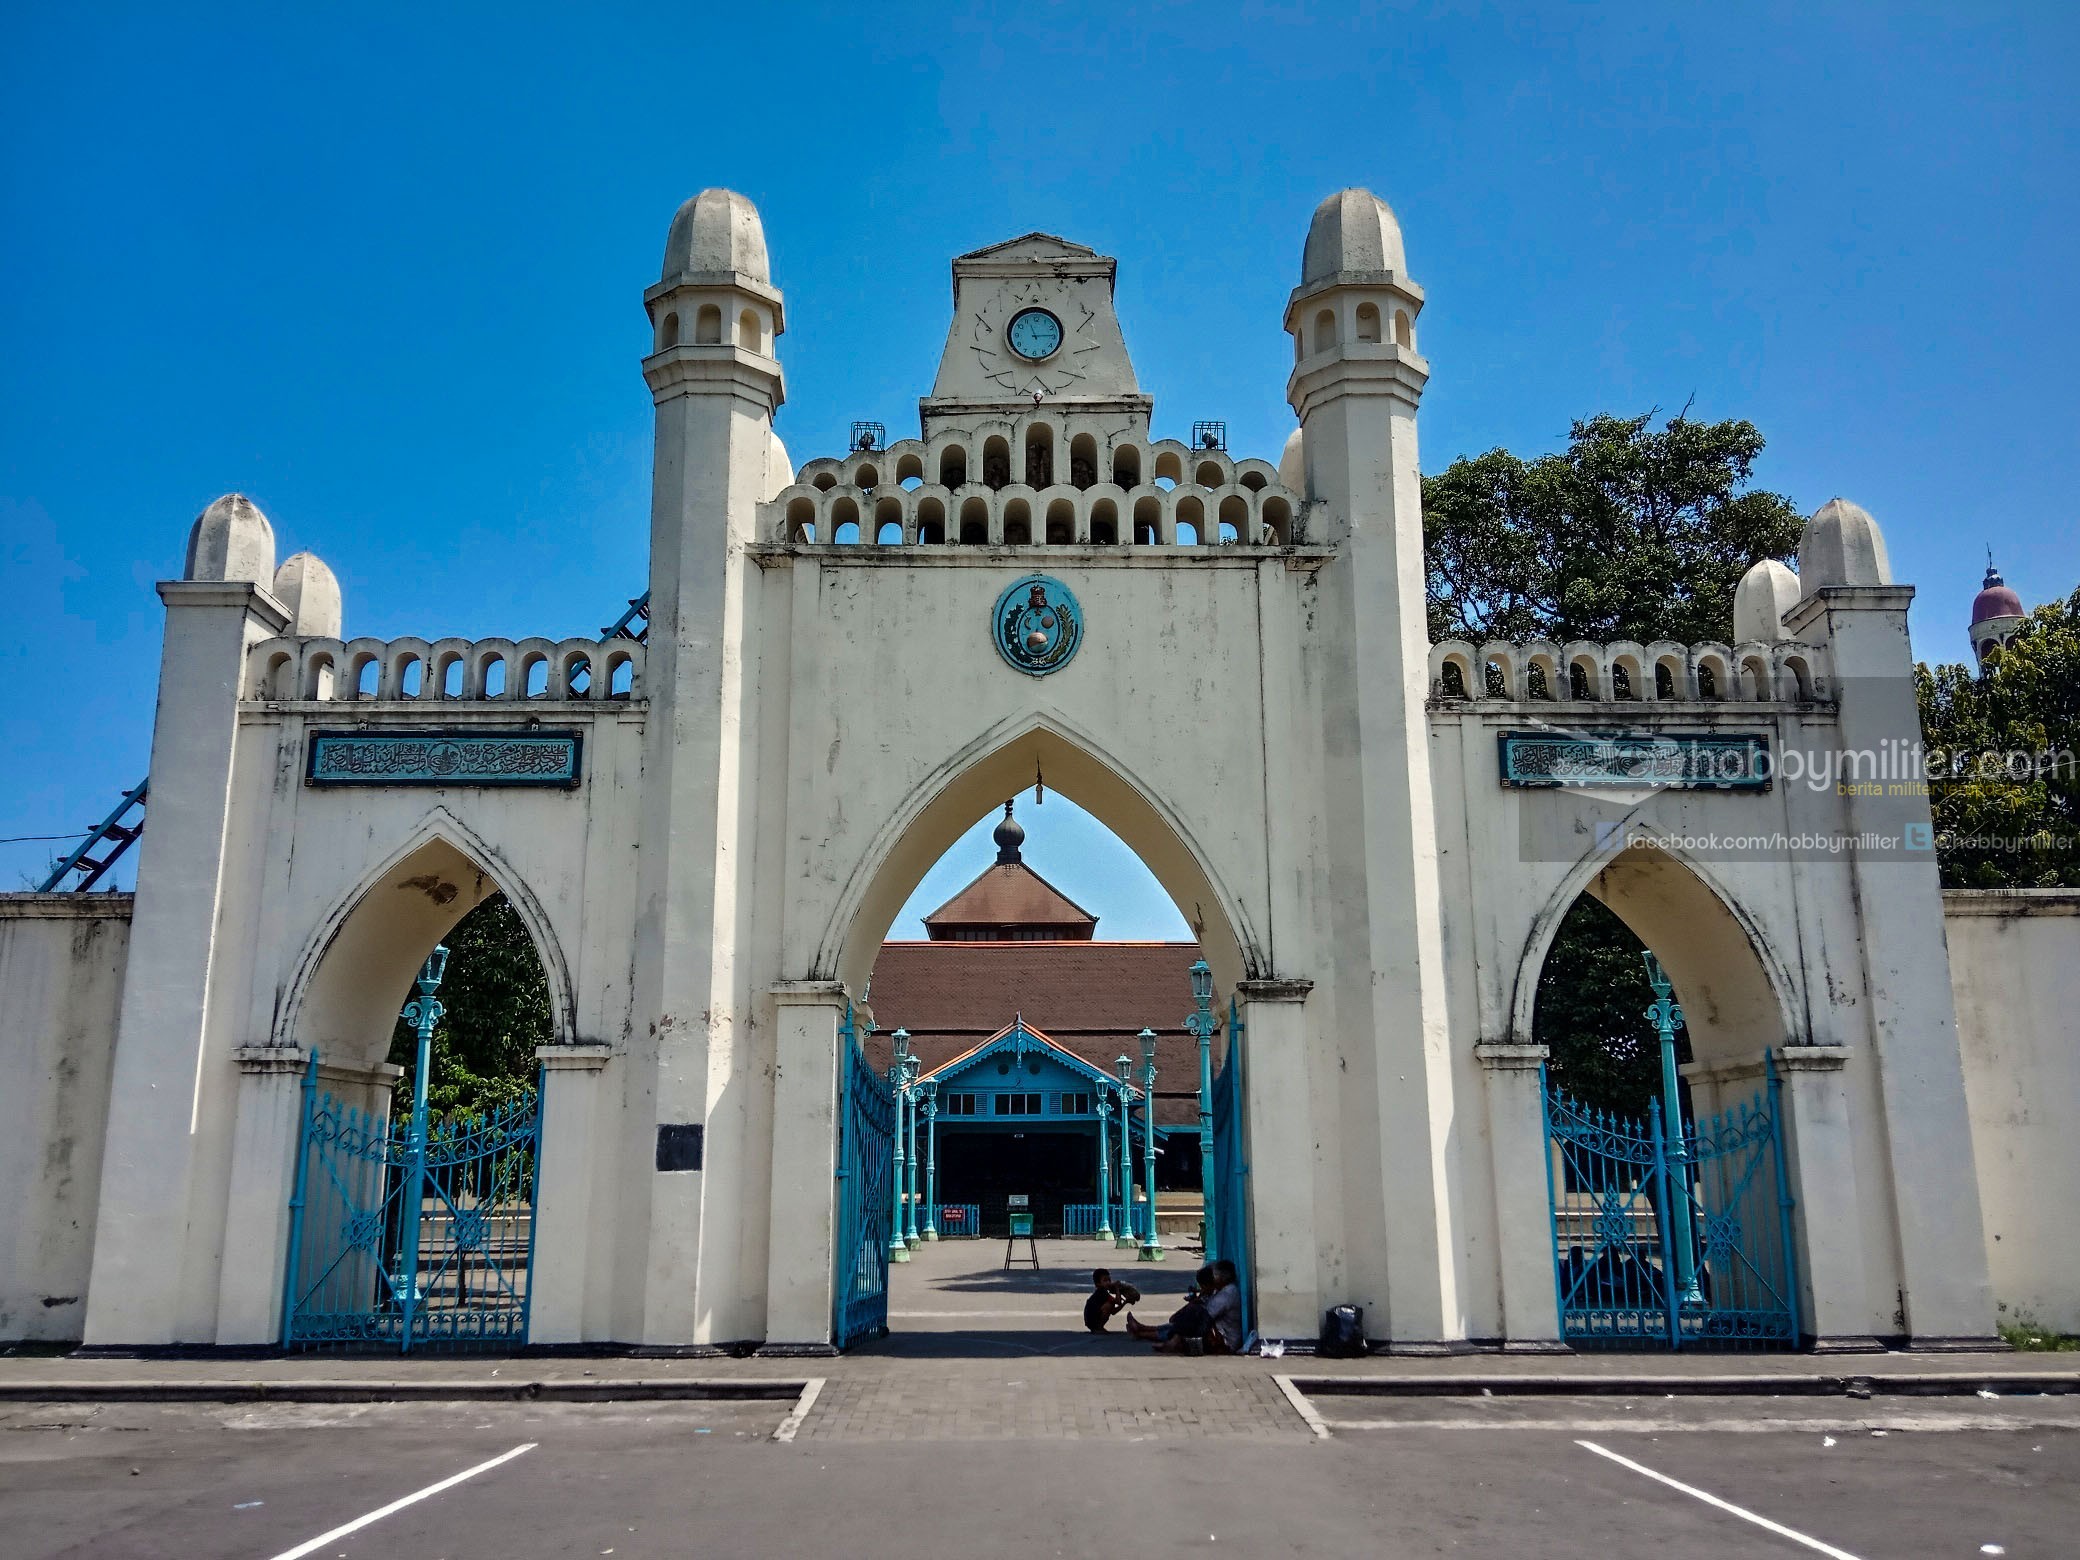 Masjid Agung Surakarta